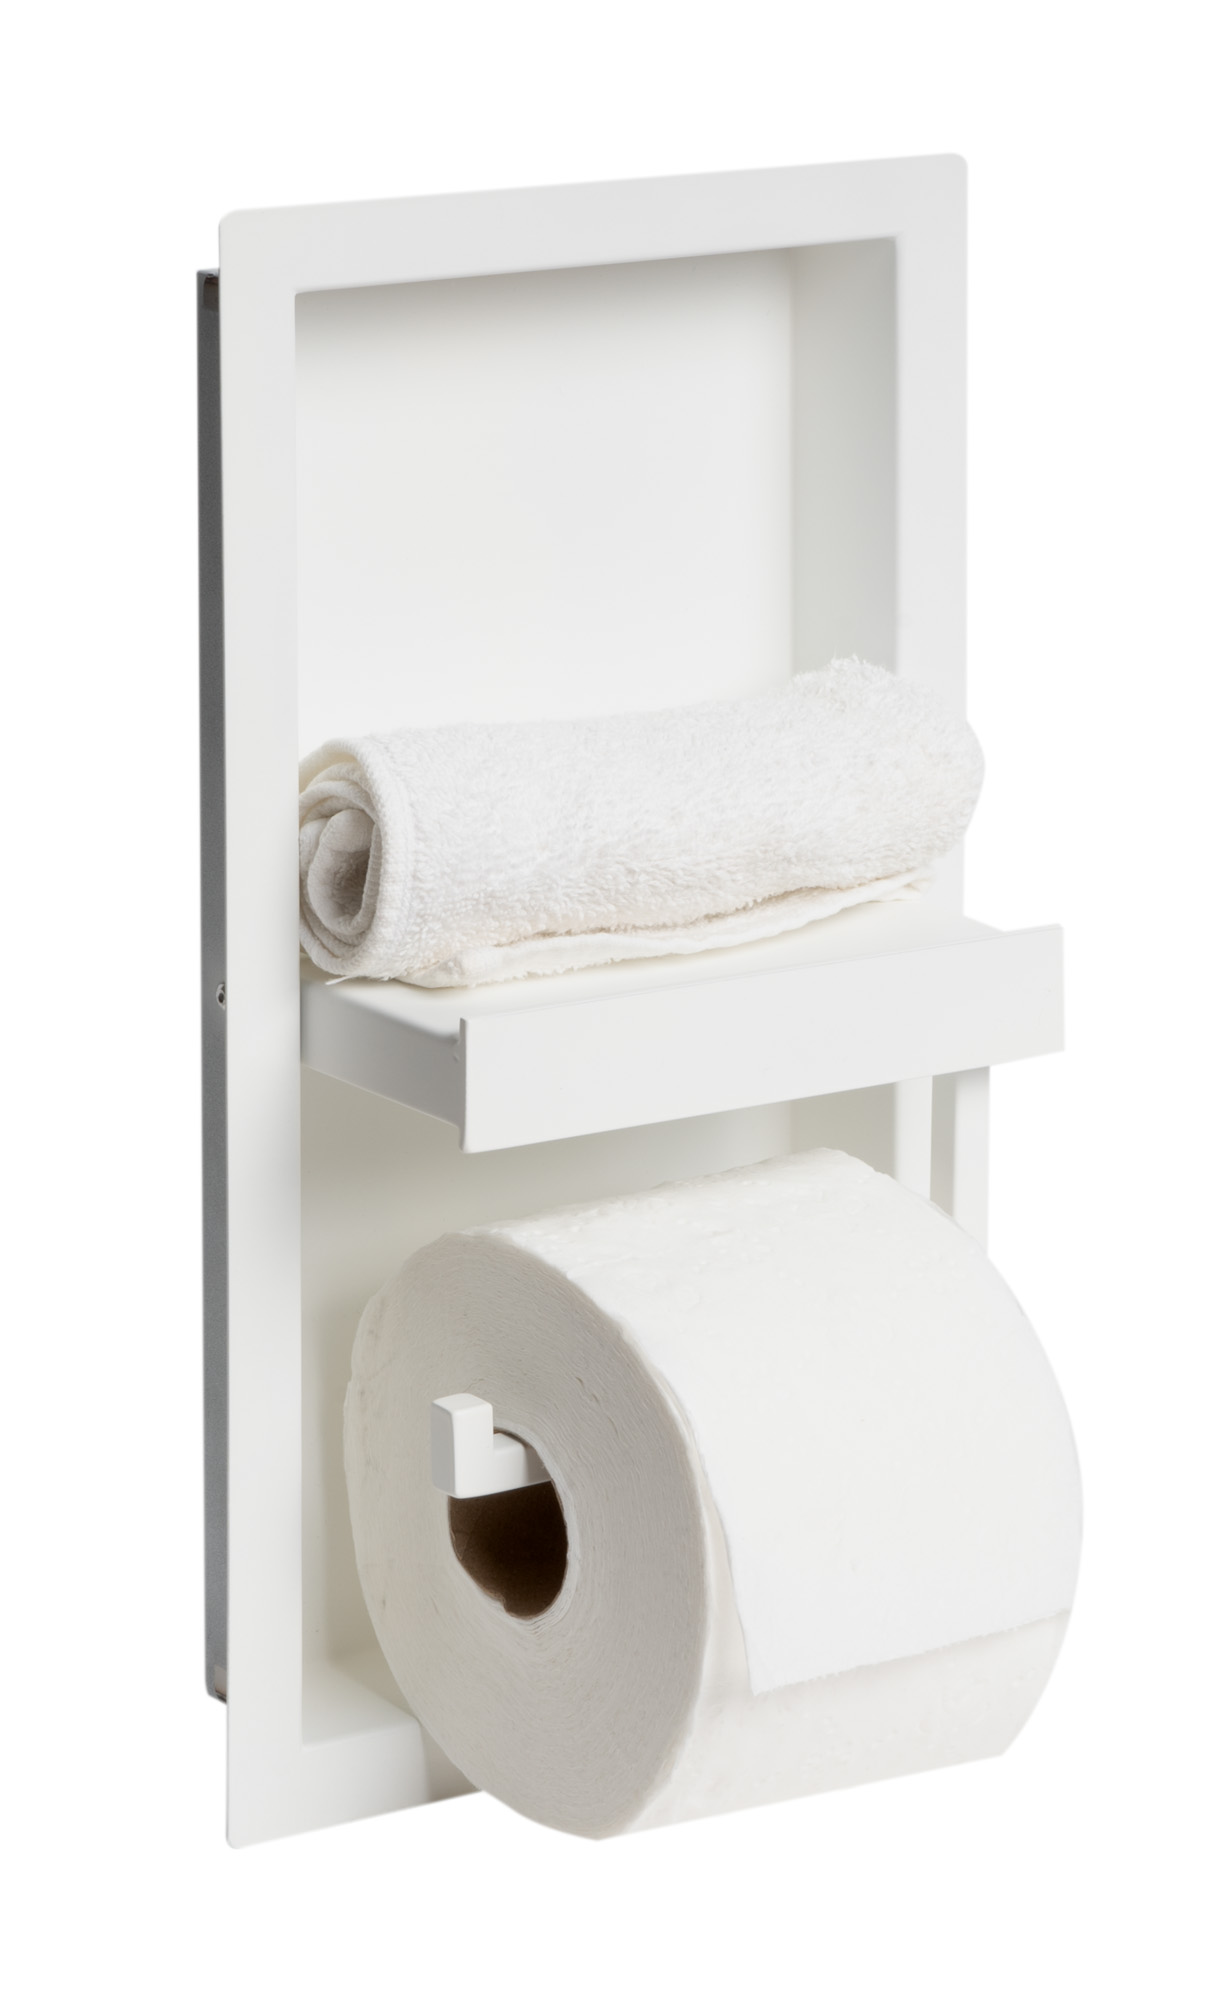 ALFI brand ABTPNC88-W White Matte Stainless Steel Recessed Shelf / Toilet Paper Holder Niche